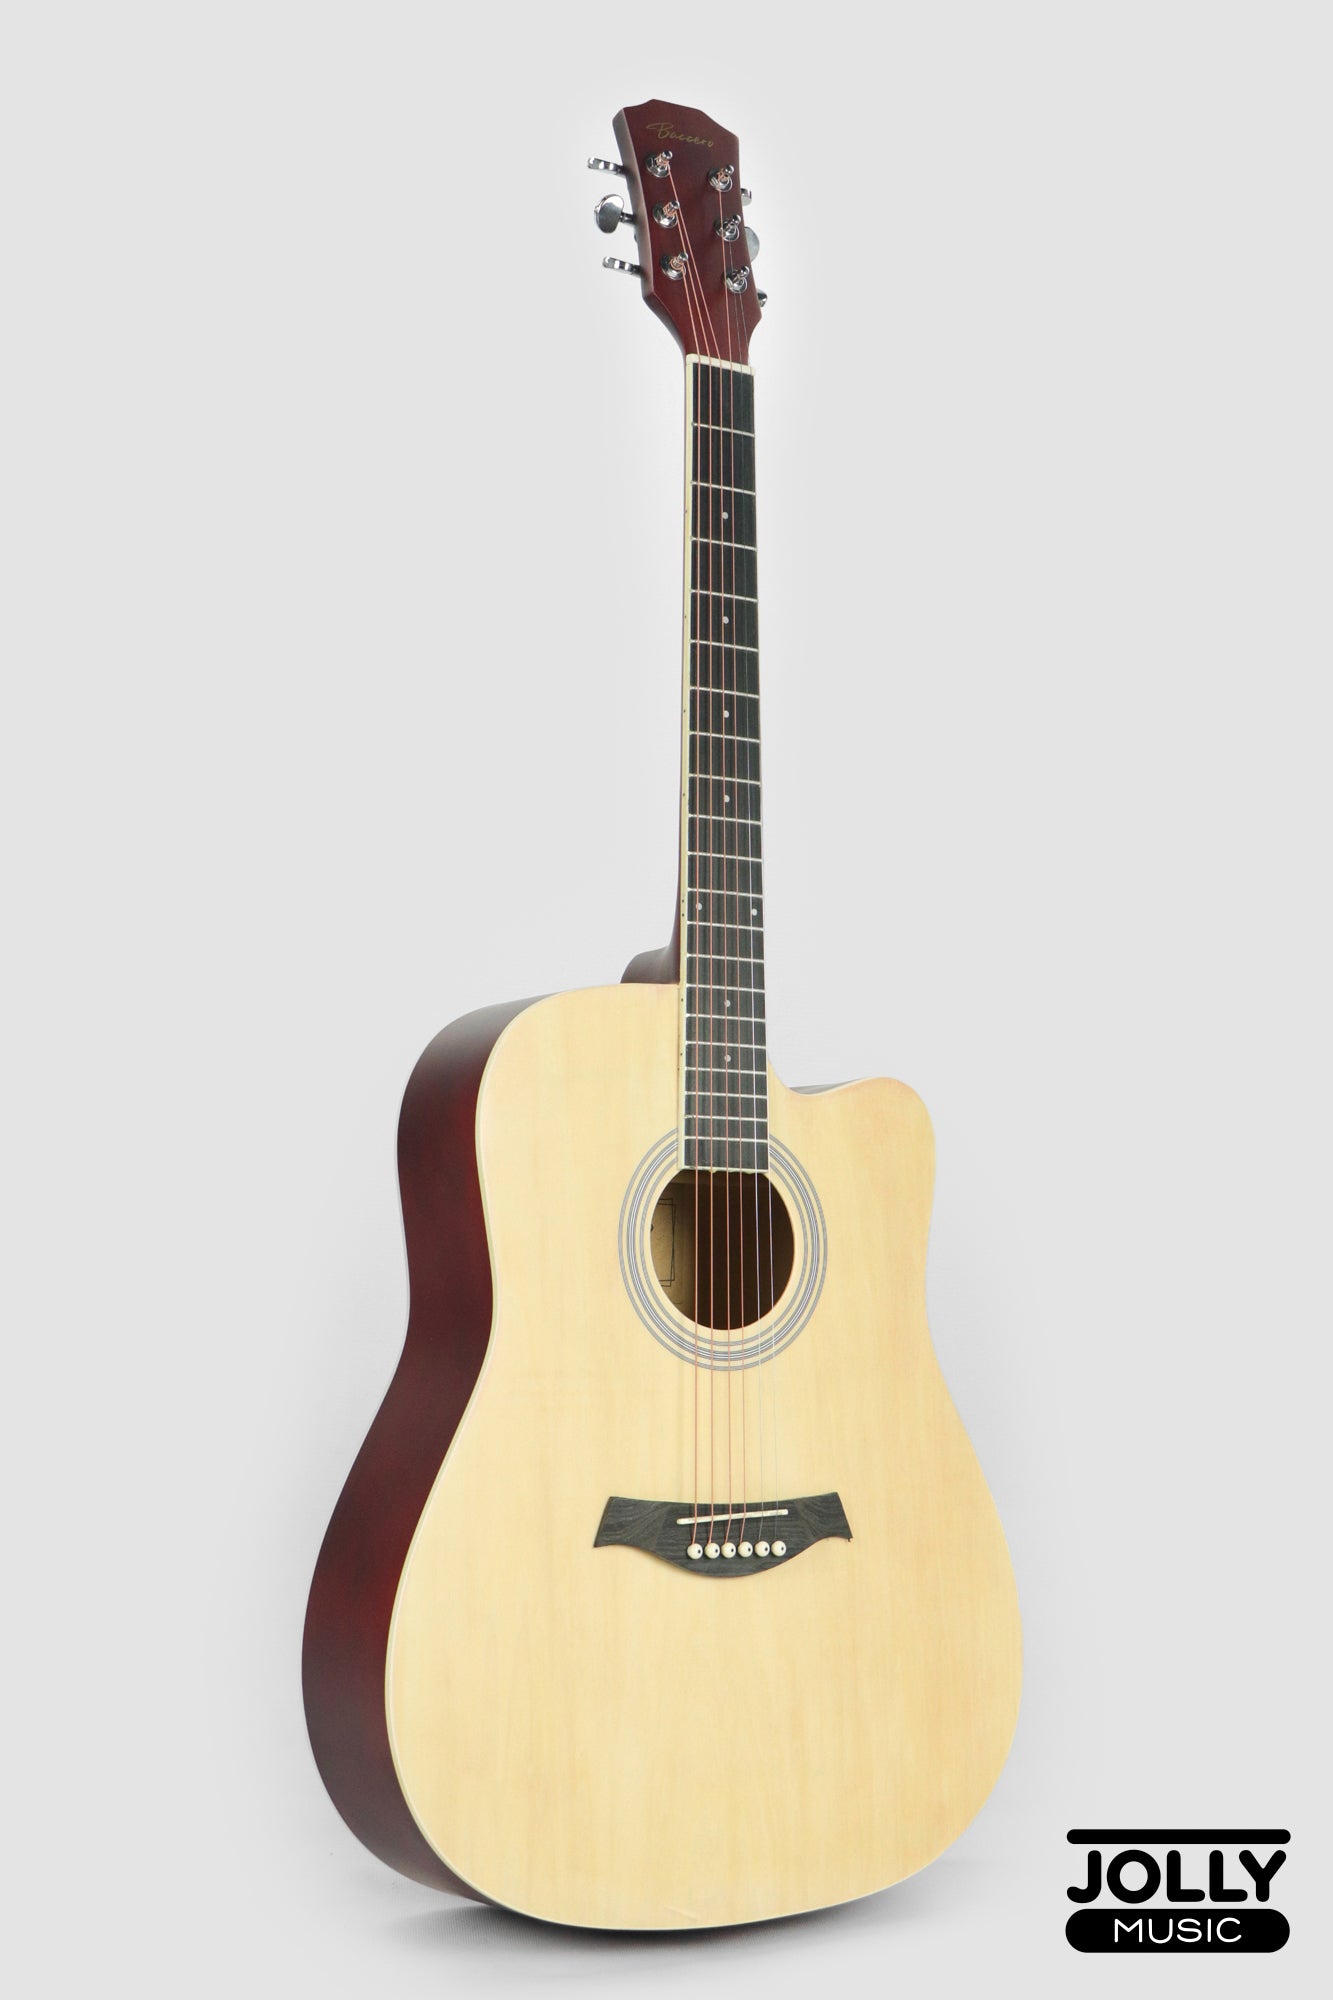 Baccero 41" Guitar KT-41Y Truss Rod w/ Case, 3 Picks, Tuner, Capo - Natural